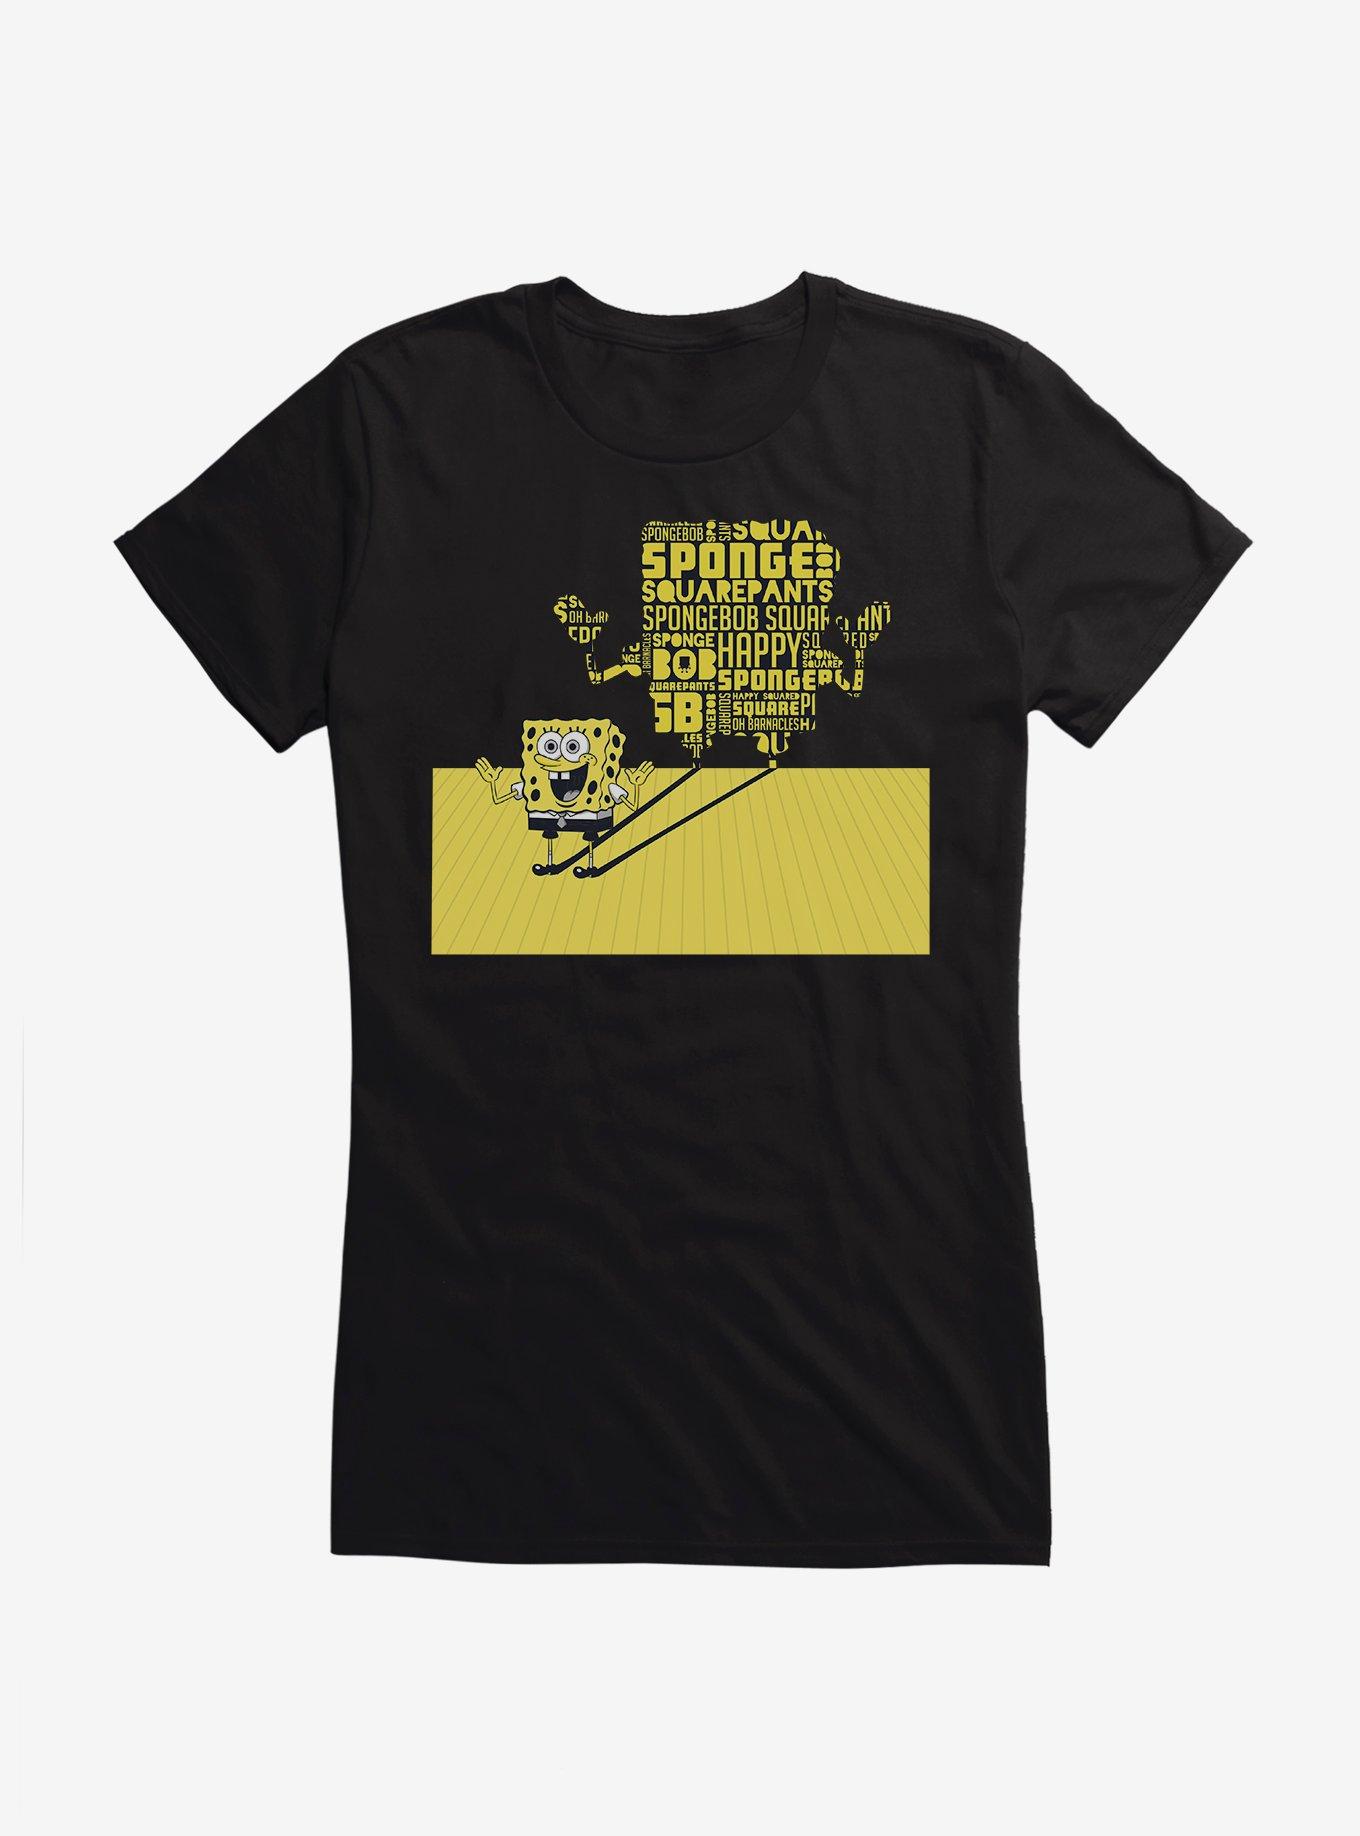 SpongeBob SquarePants Shadow Typography Girls T-Shirt